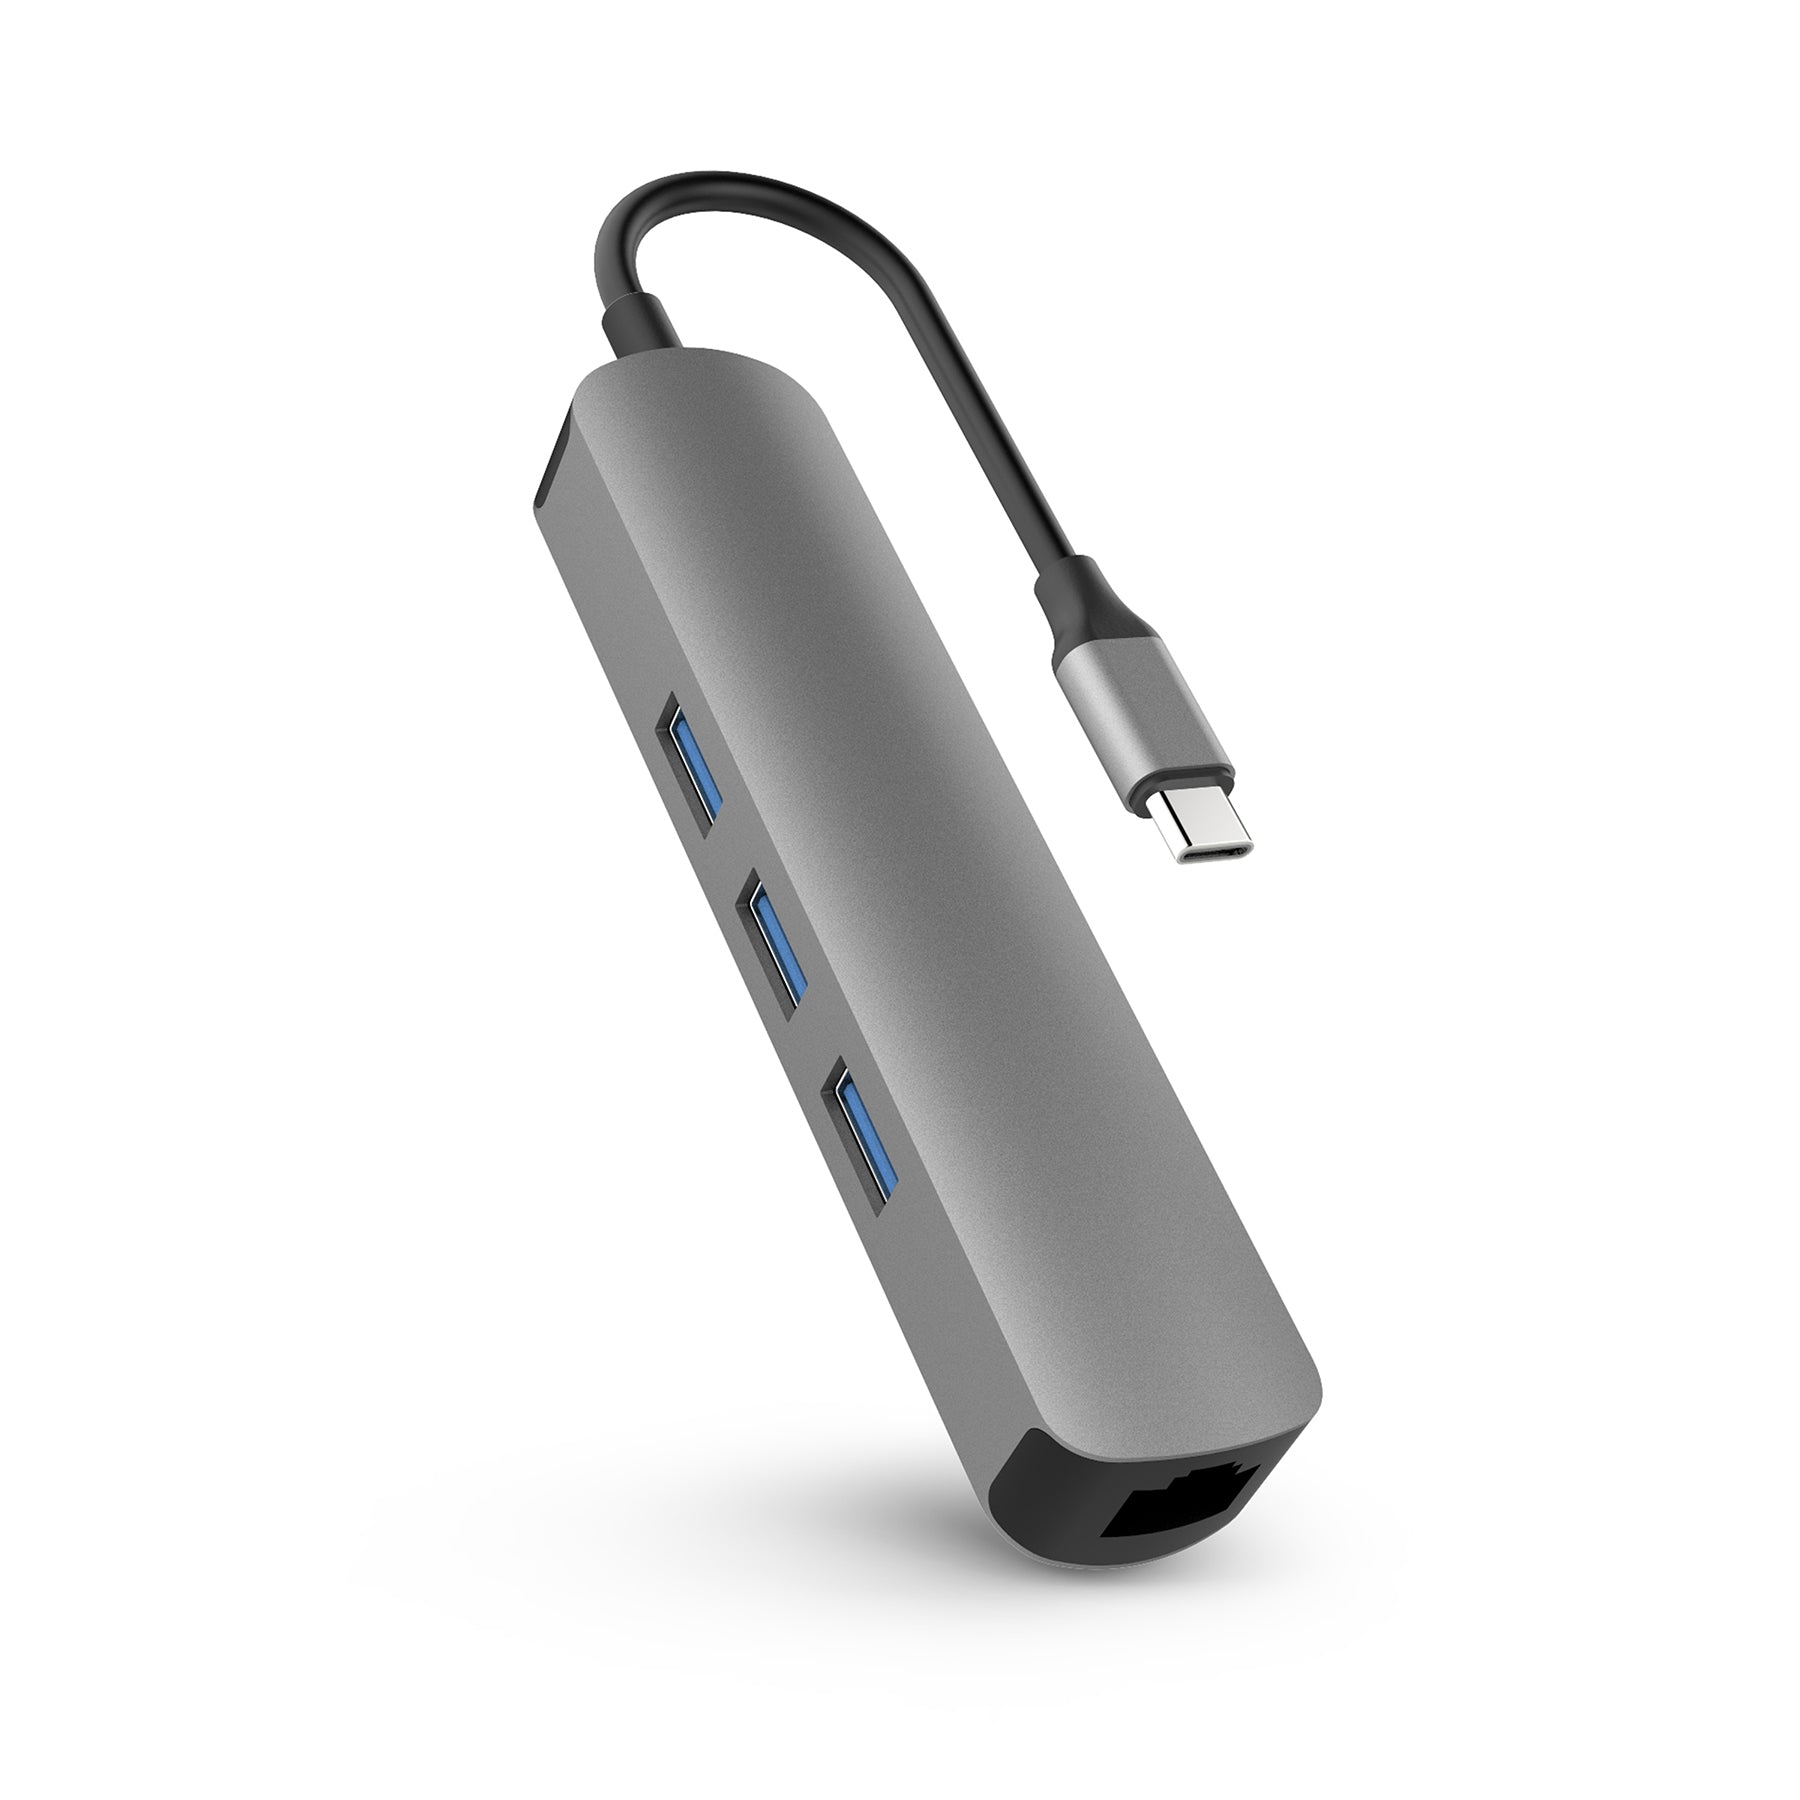 Evolueren knoop Fjord 6-in-1 USB-C Hub with 4KHDMI port for MacBook, PC | HyperDrive –  HyperShop.com